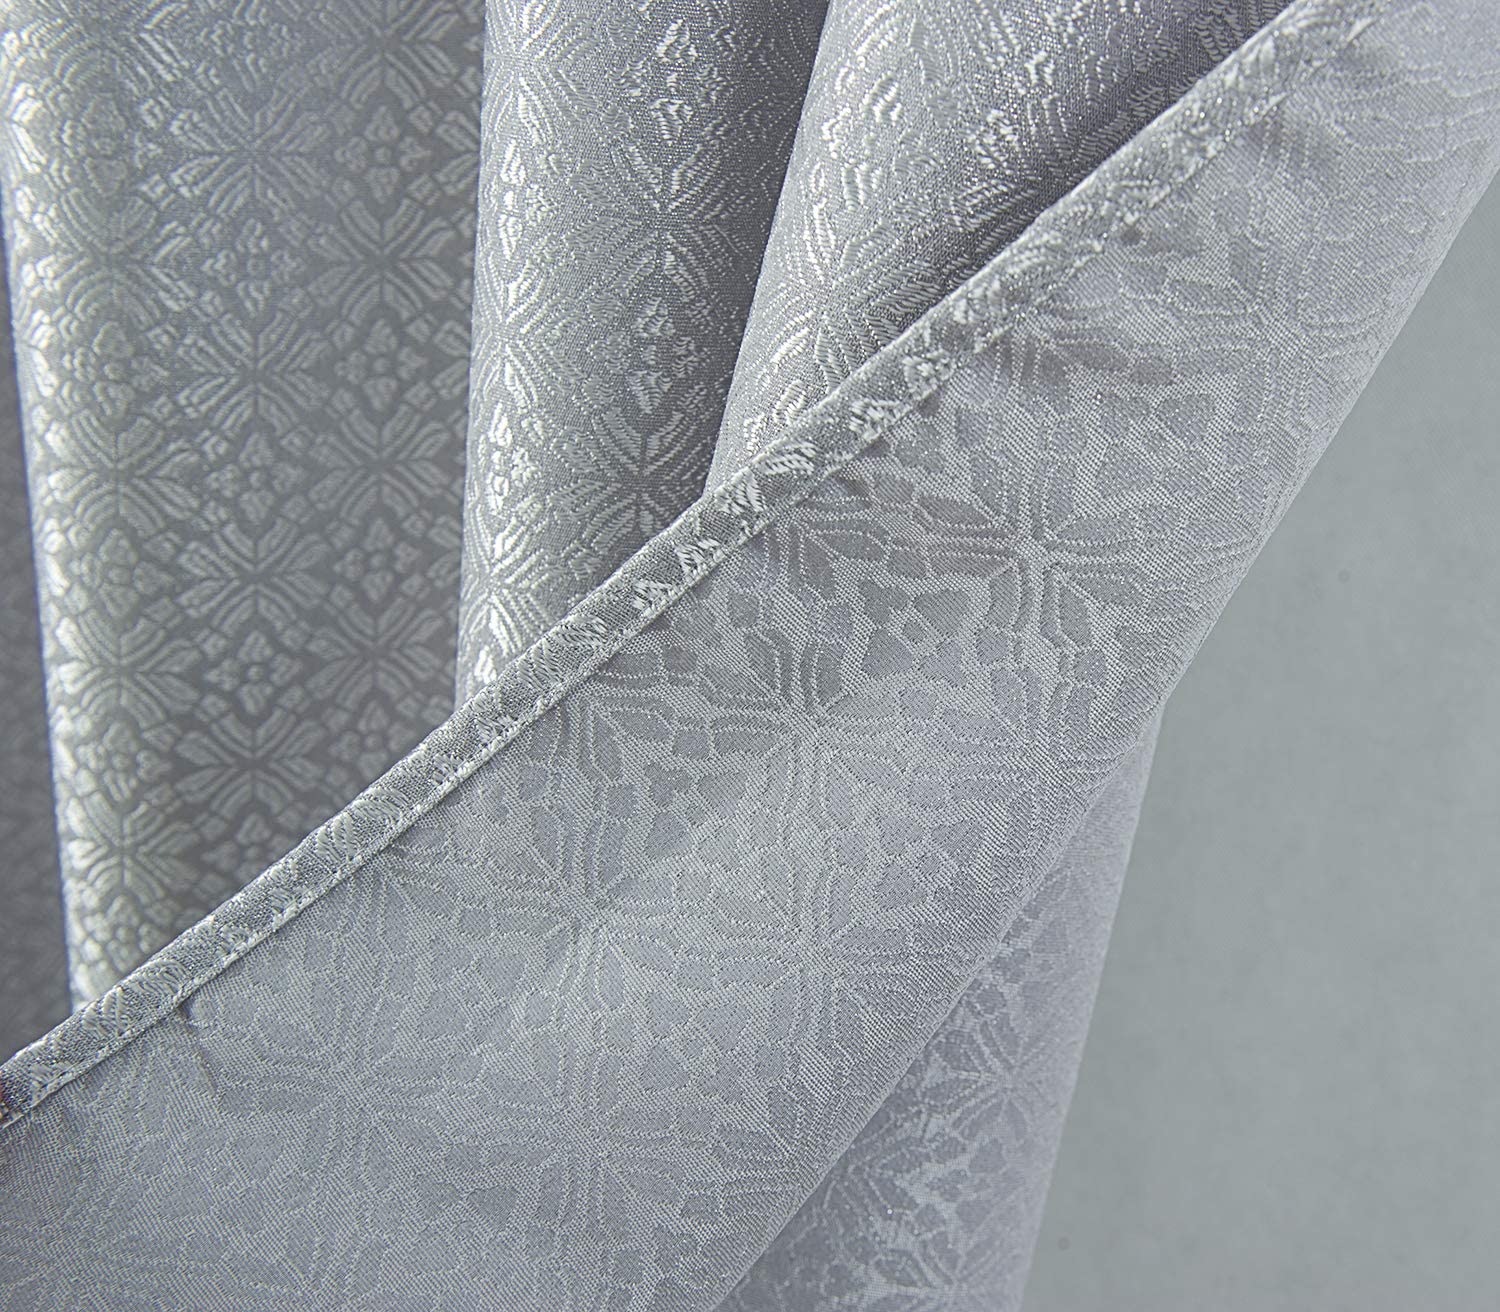 Naples Textured Jacquard 53 x 84 in. Single Rod Pocket Curtain Panel - Linen Universe Co.